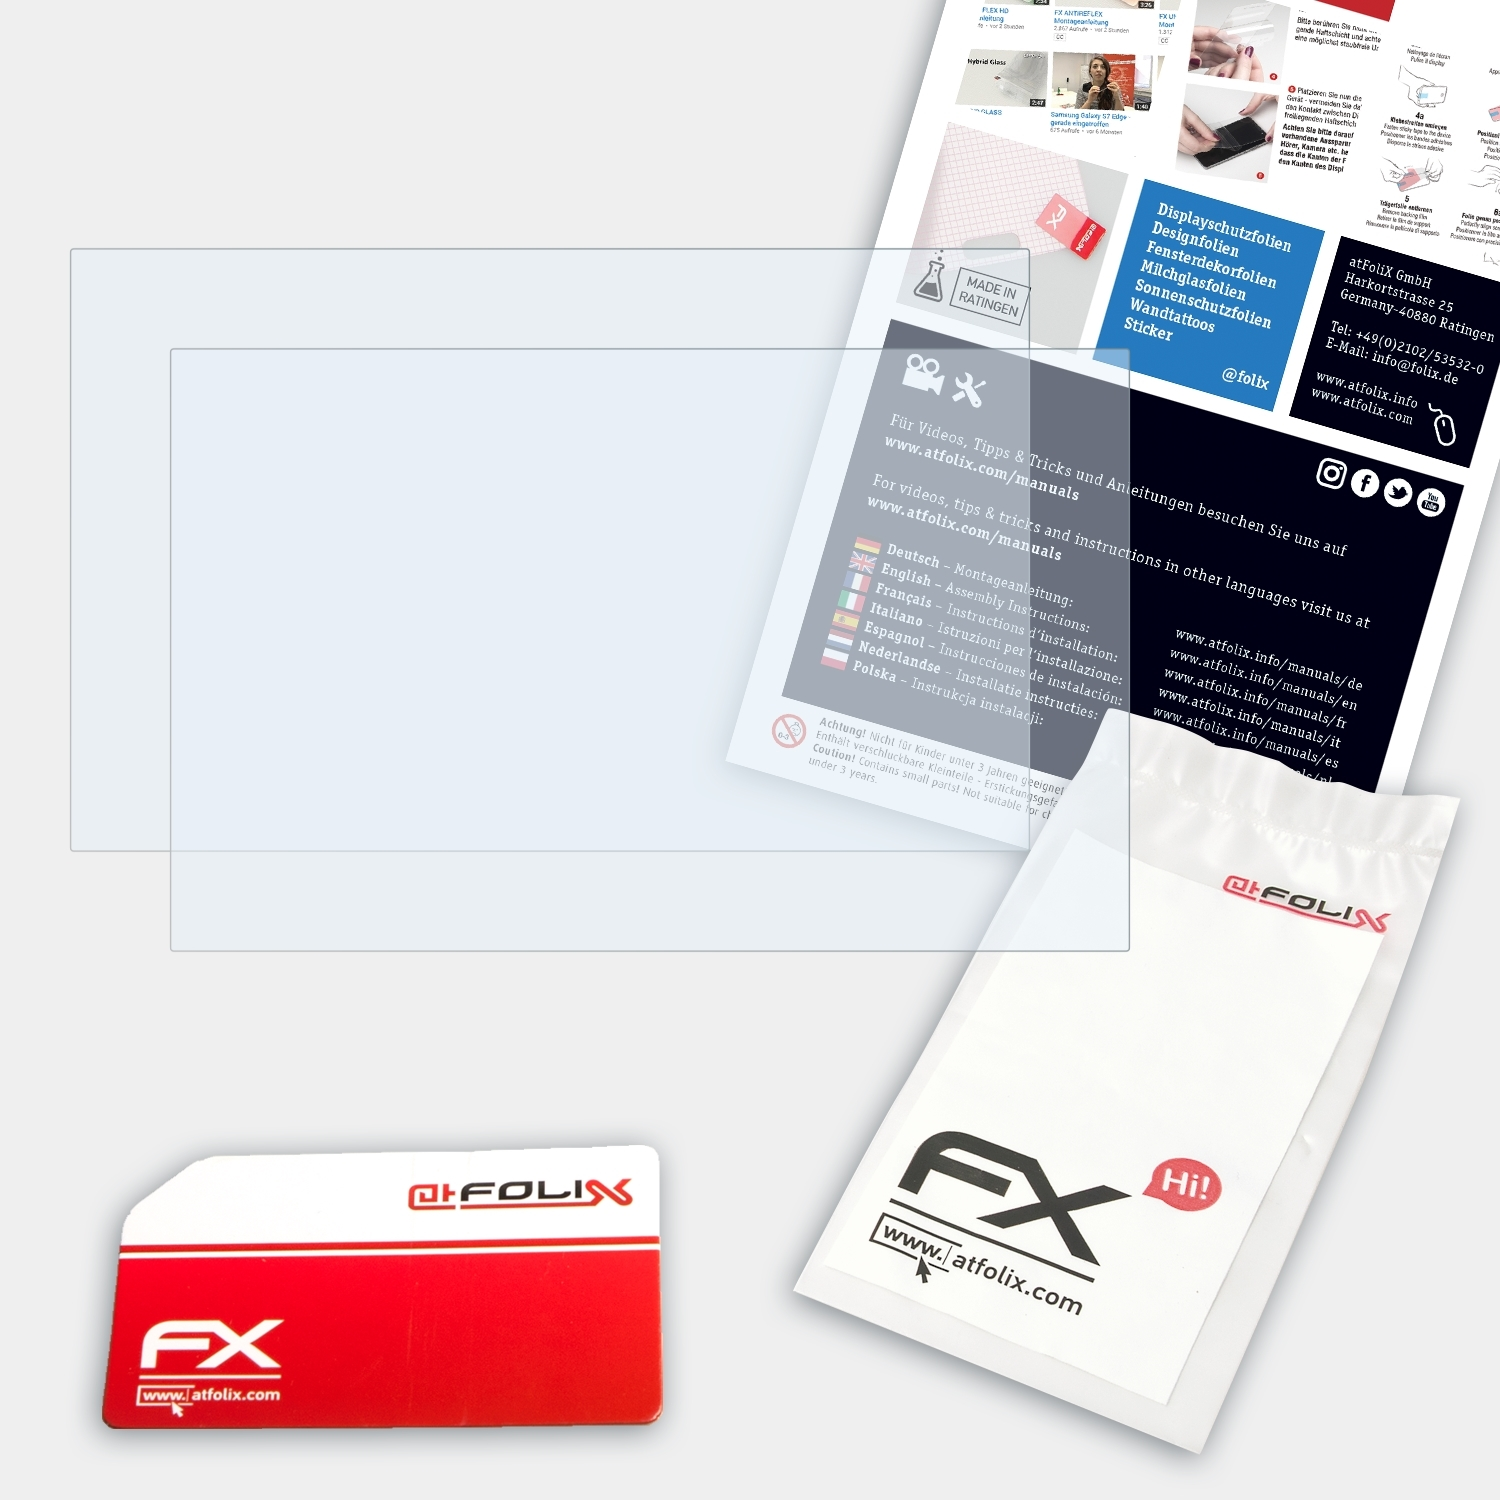 ATFOLIX 2x FX-Clear Displayschutz(für Panasonic ToughPad FZ-M1 FZ-B2) 